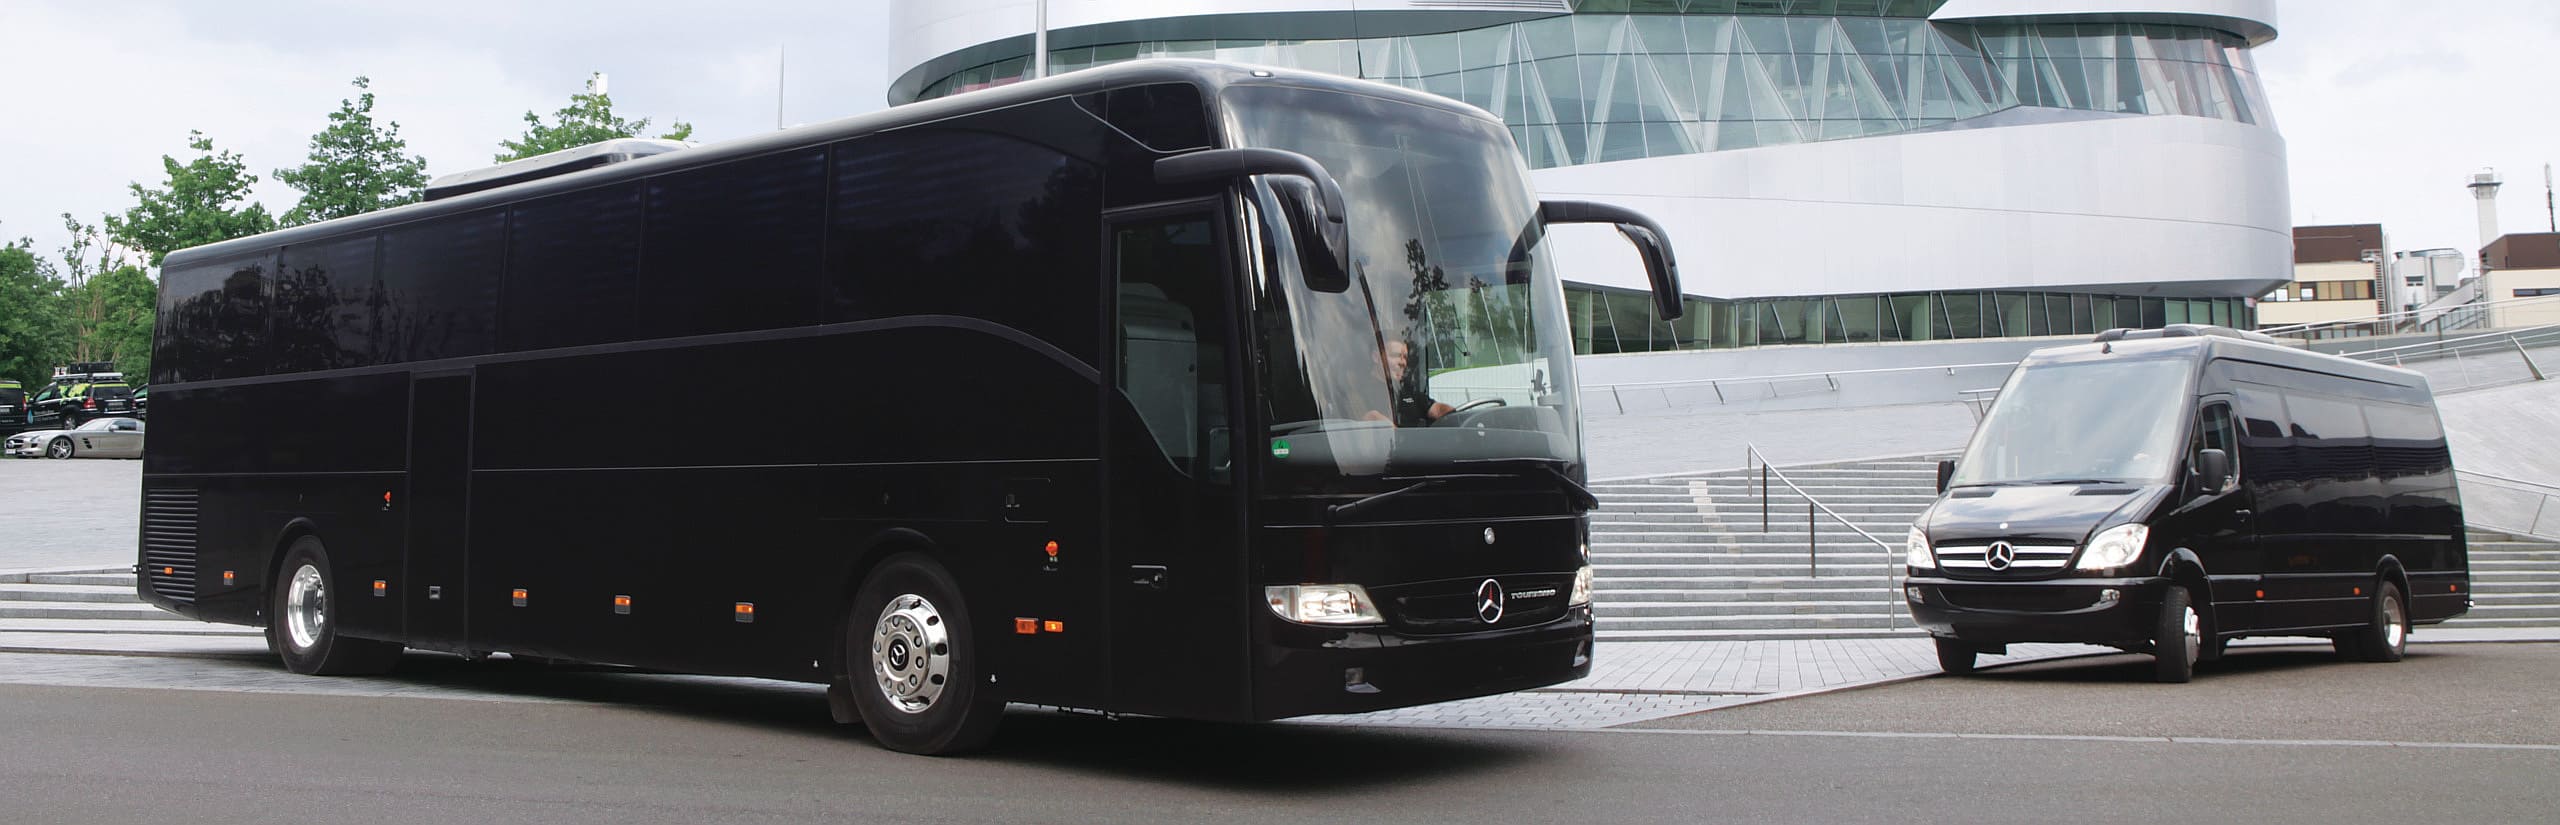 Vipliner – Conference bus – Vipbus – Luxury bus – for hire in Stuttgart